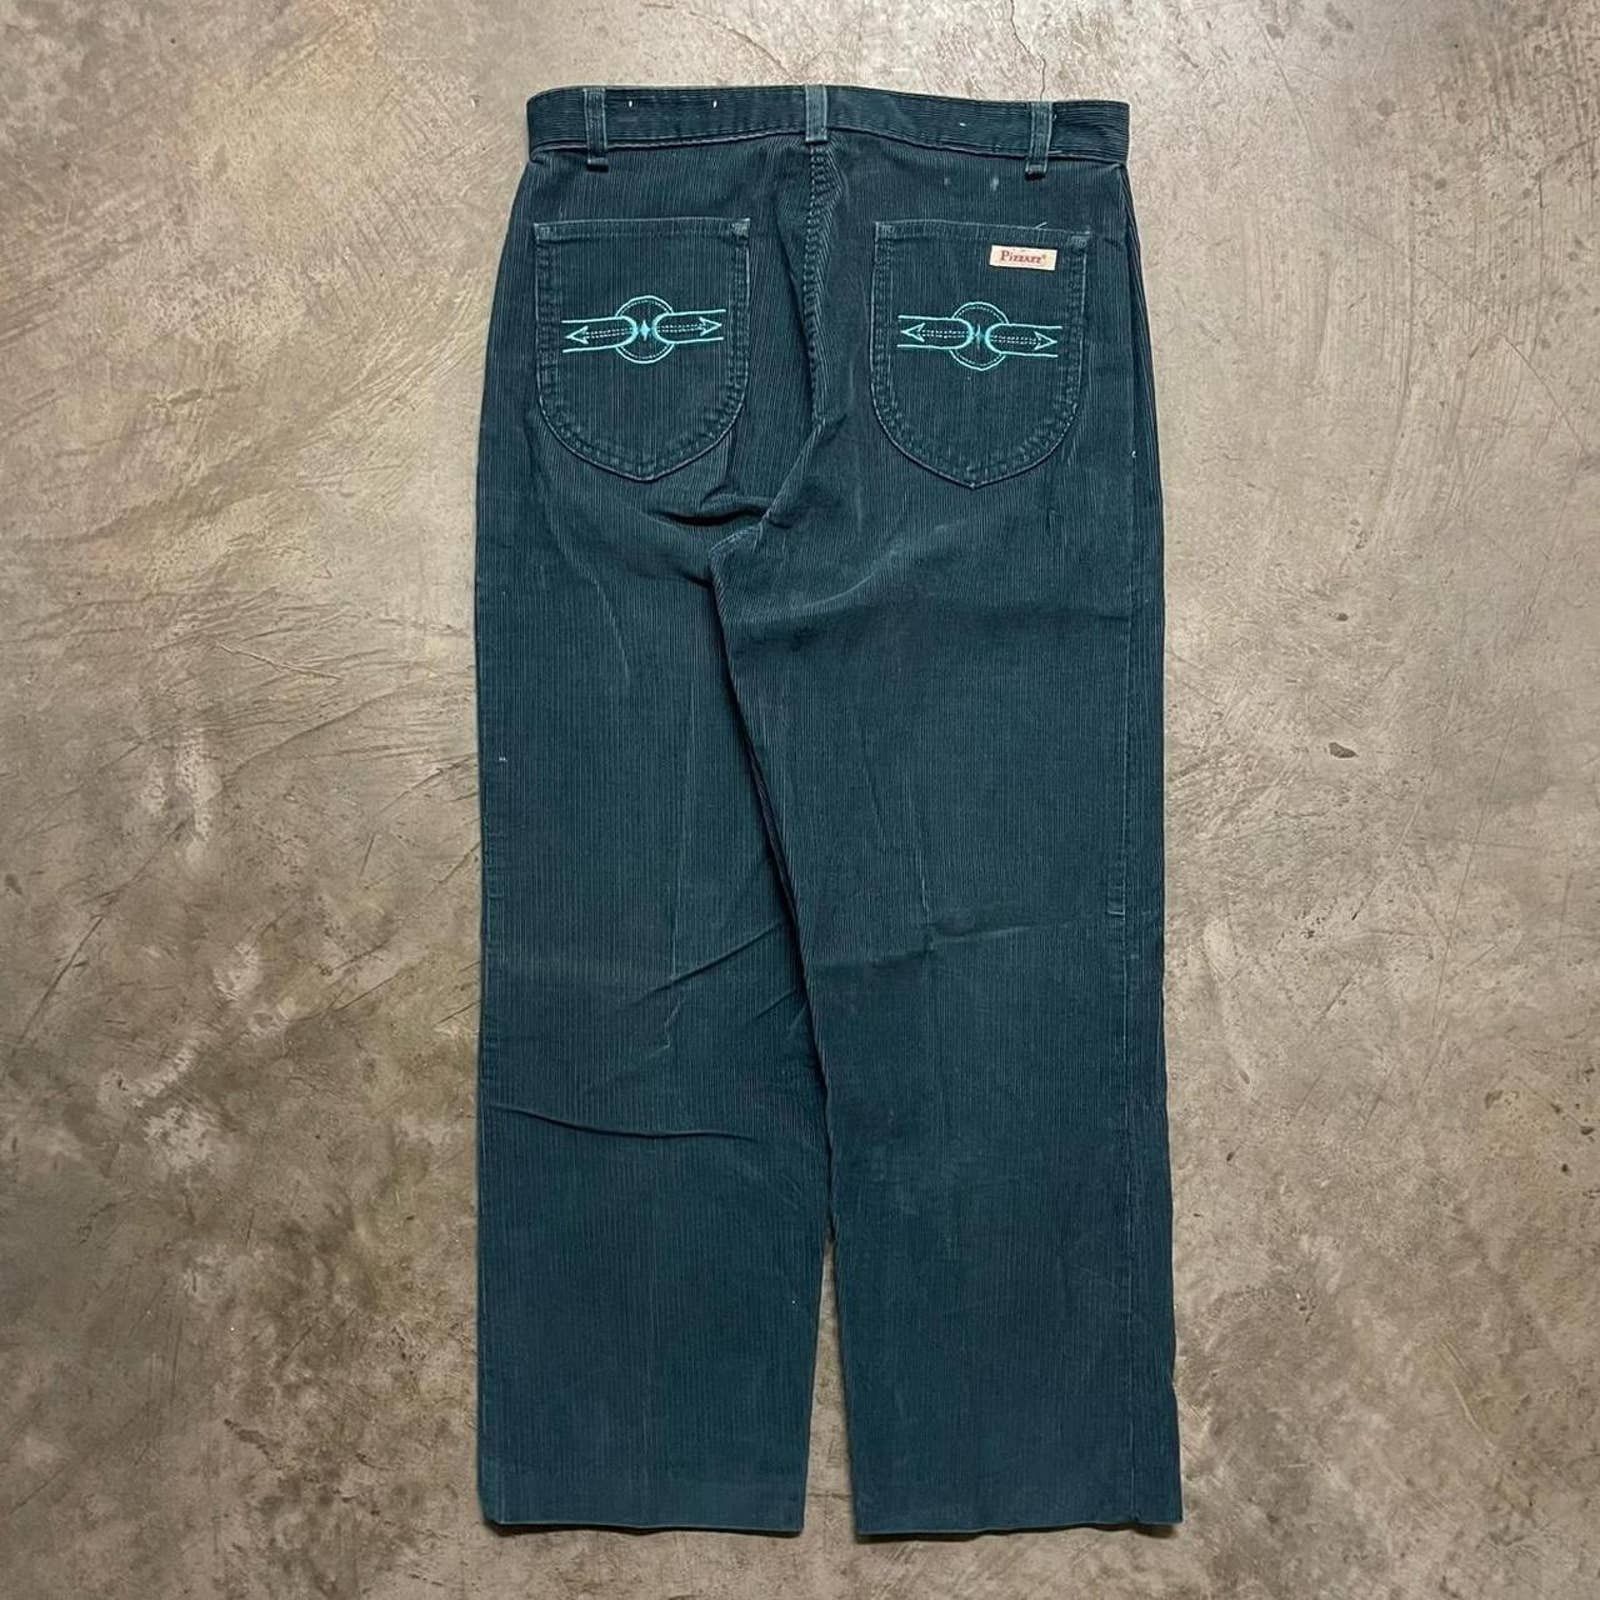 Vintage Vintage 1980s Turquoise Corduroy Casual Fit Pants Womens 16 Size 38" / US 16 / IT 52 - 1 Preview